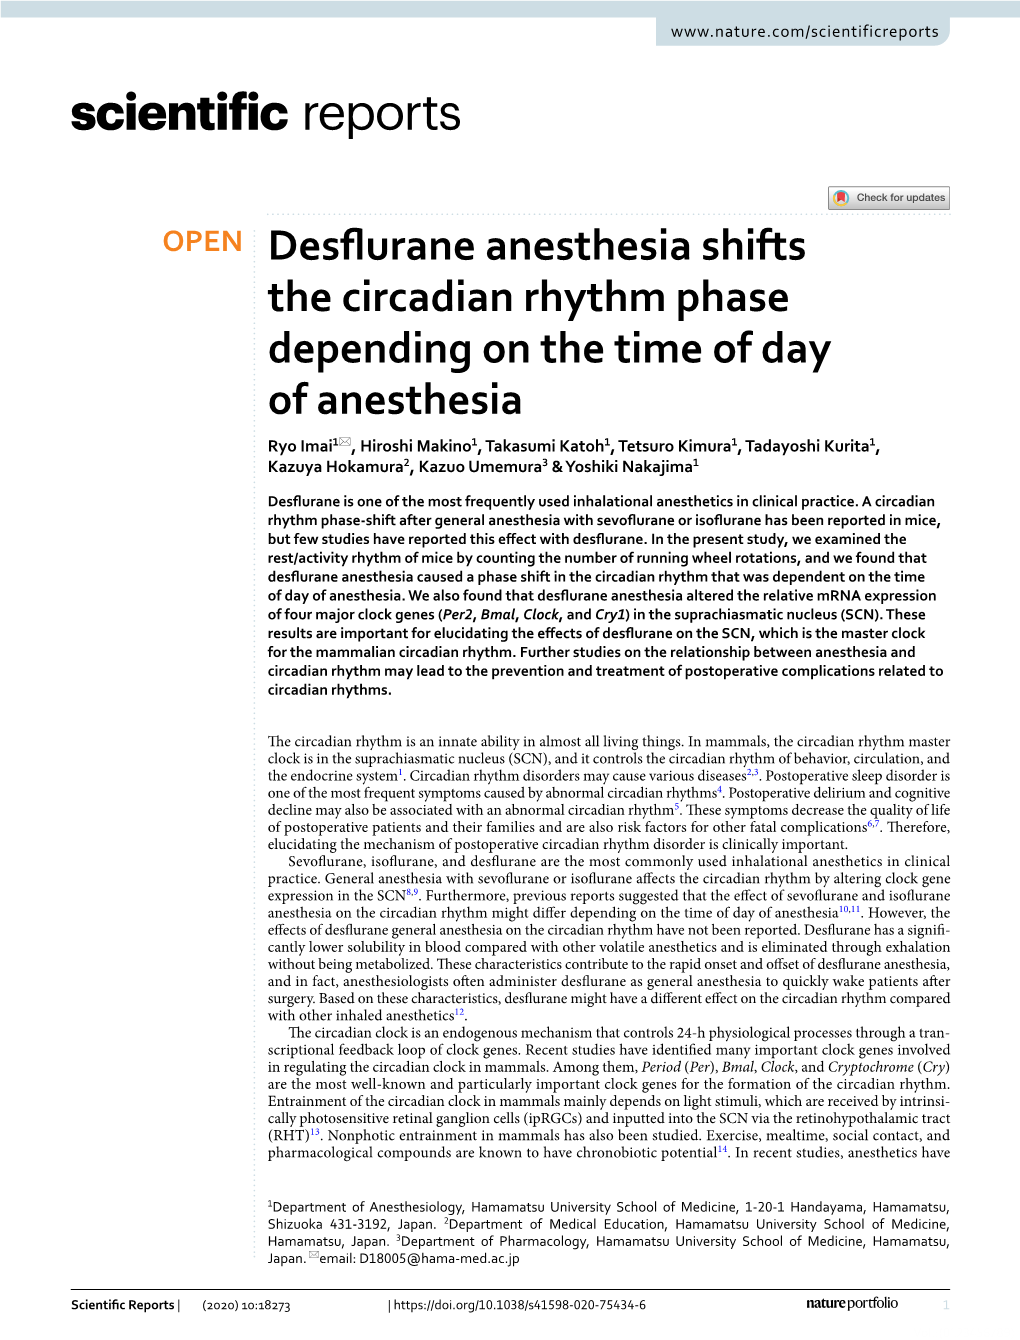 Desflurane Anesthesia Shifts the Circadian Rhythm Phase Depending